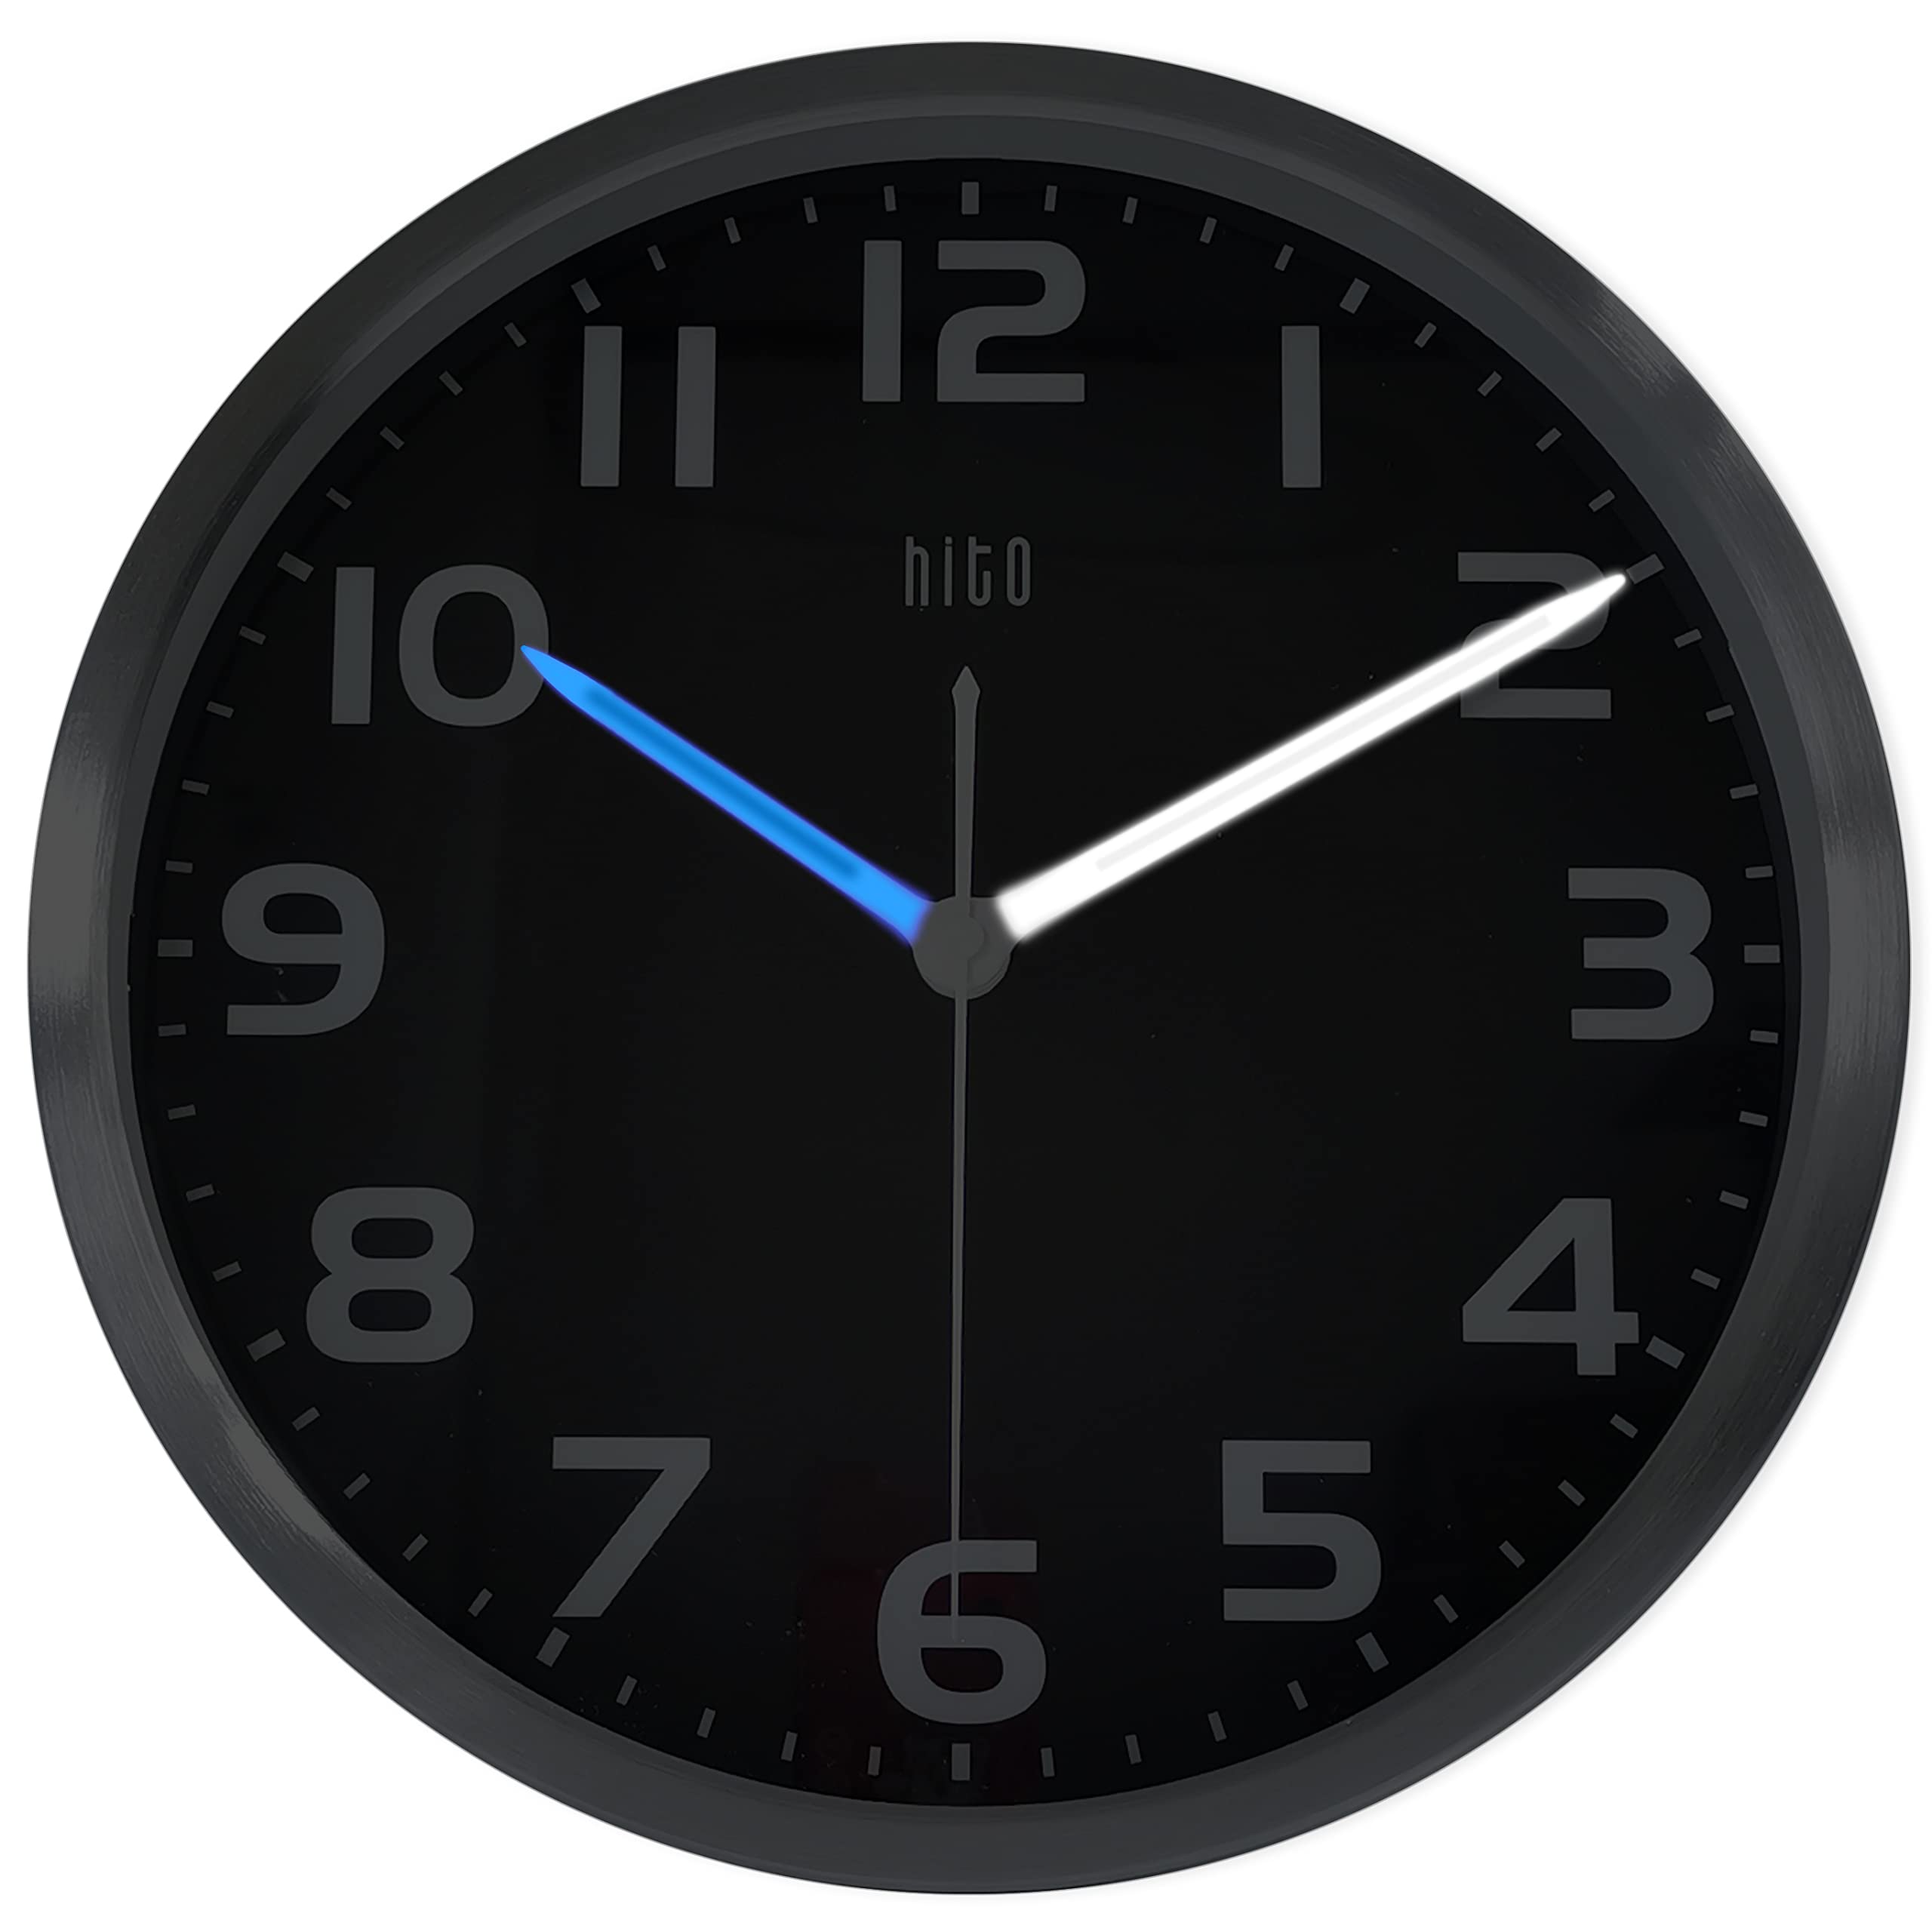 Clock with adjustable hands